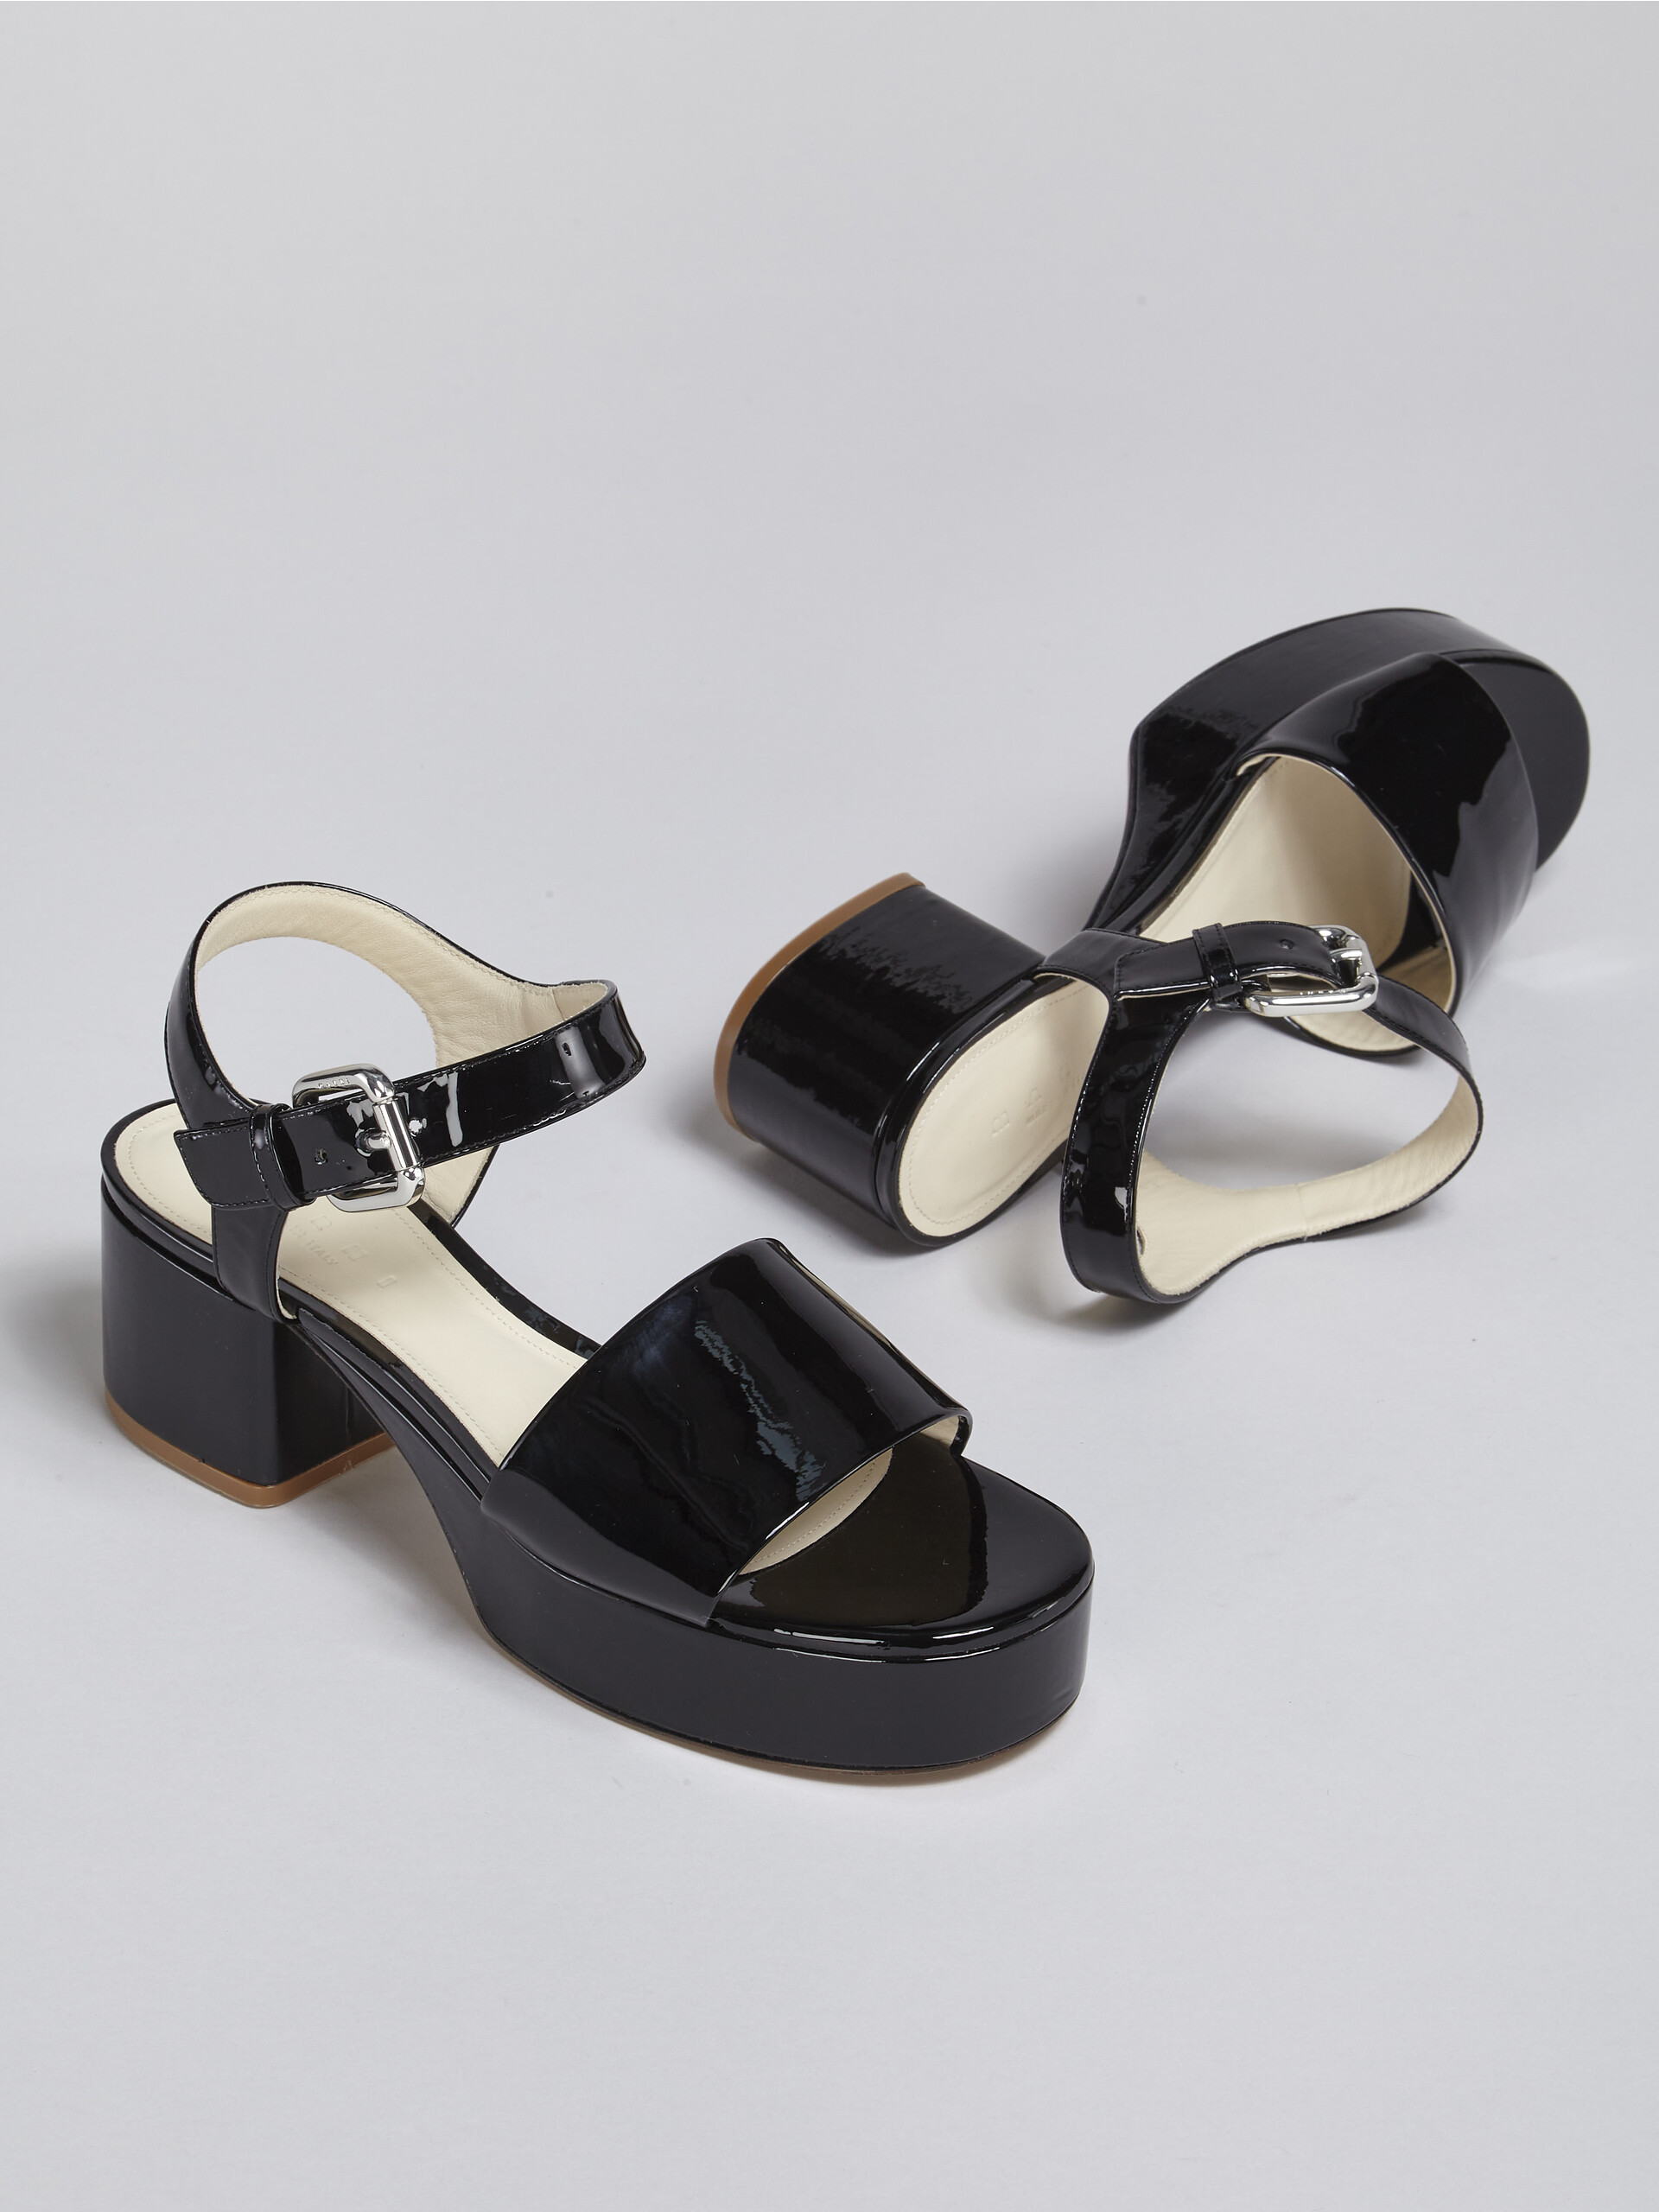 Black patent leather sandal - Sandals - Image 5